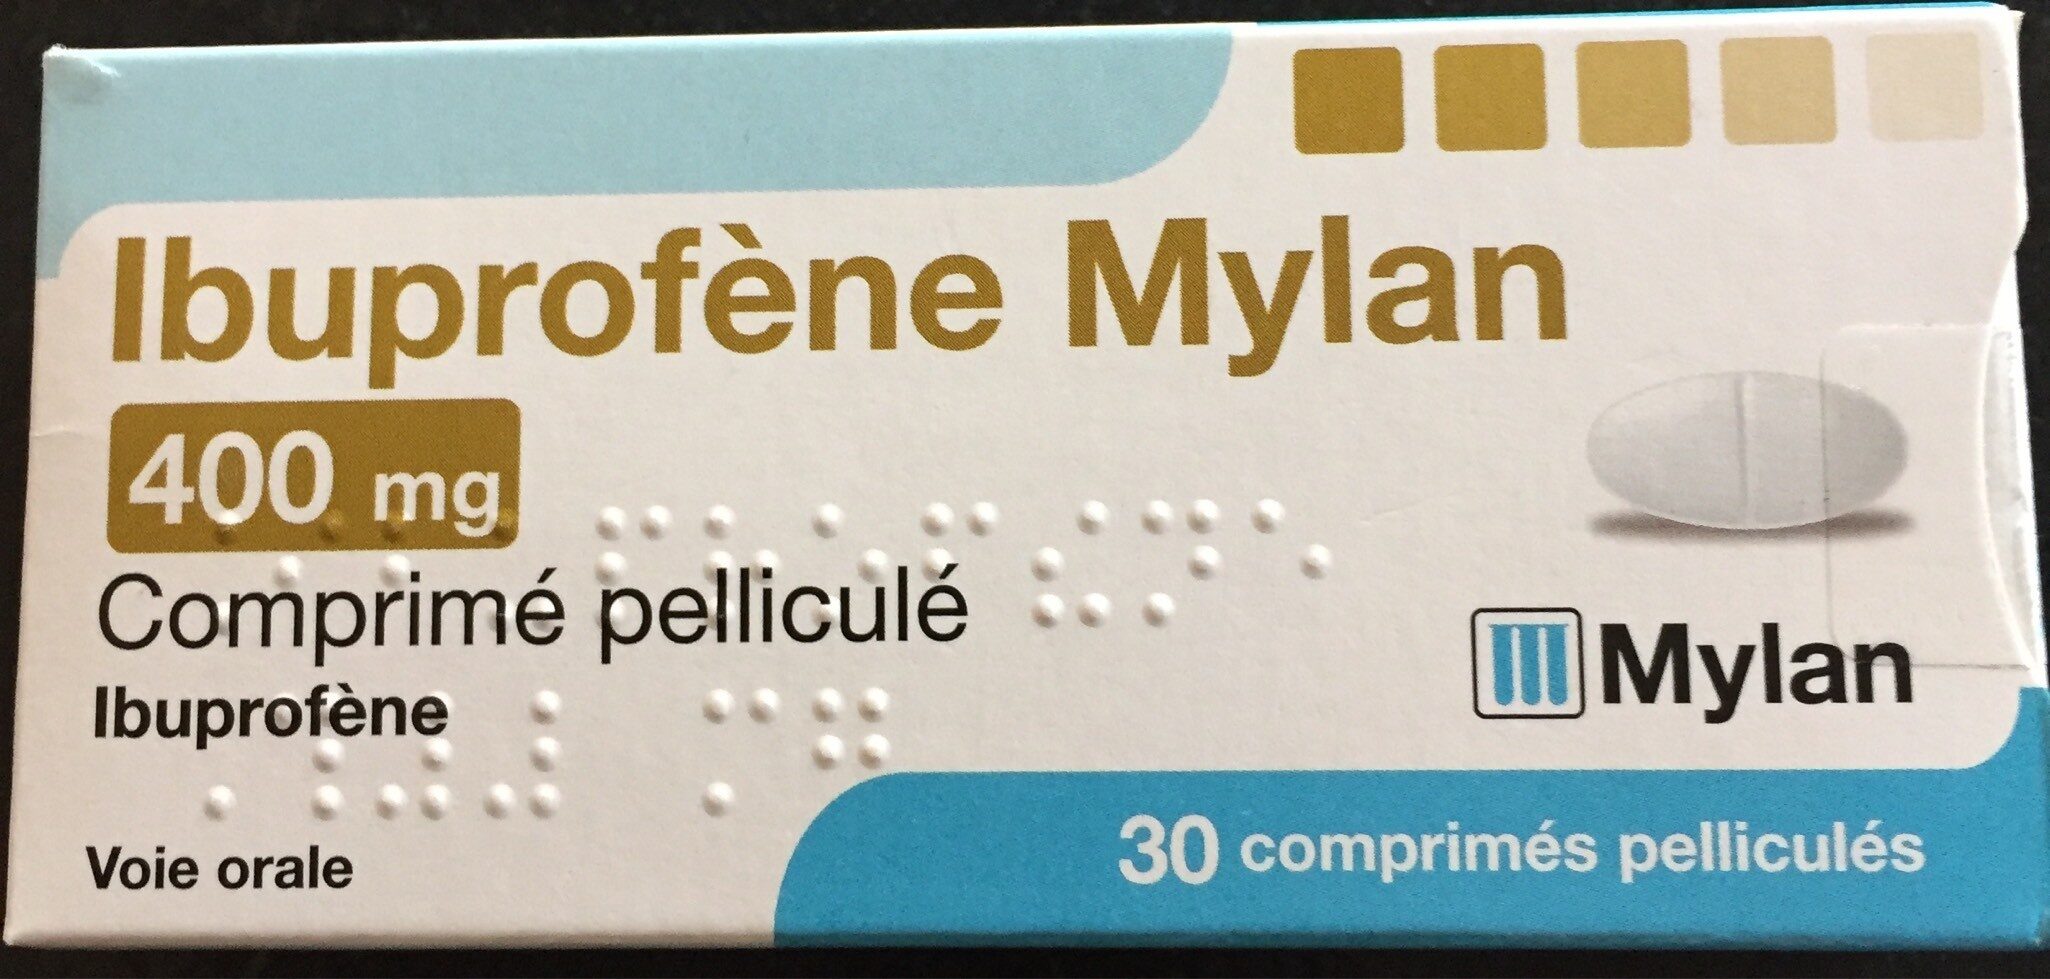 Ibuprofène Mylan 400 mg - Produkt - fr